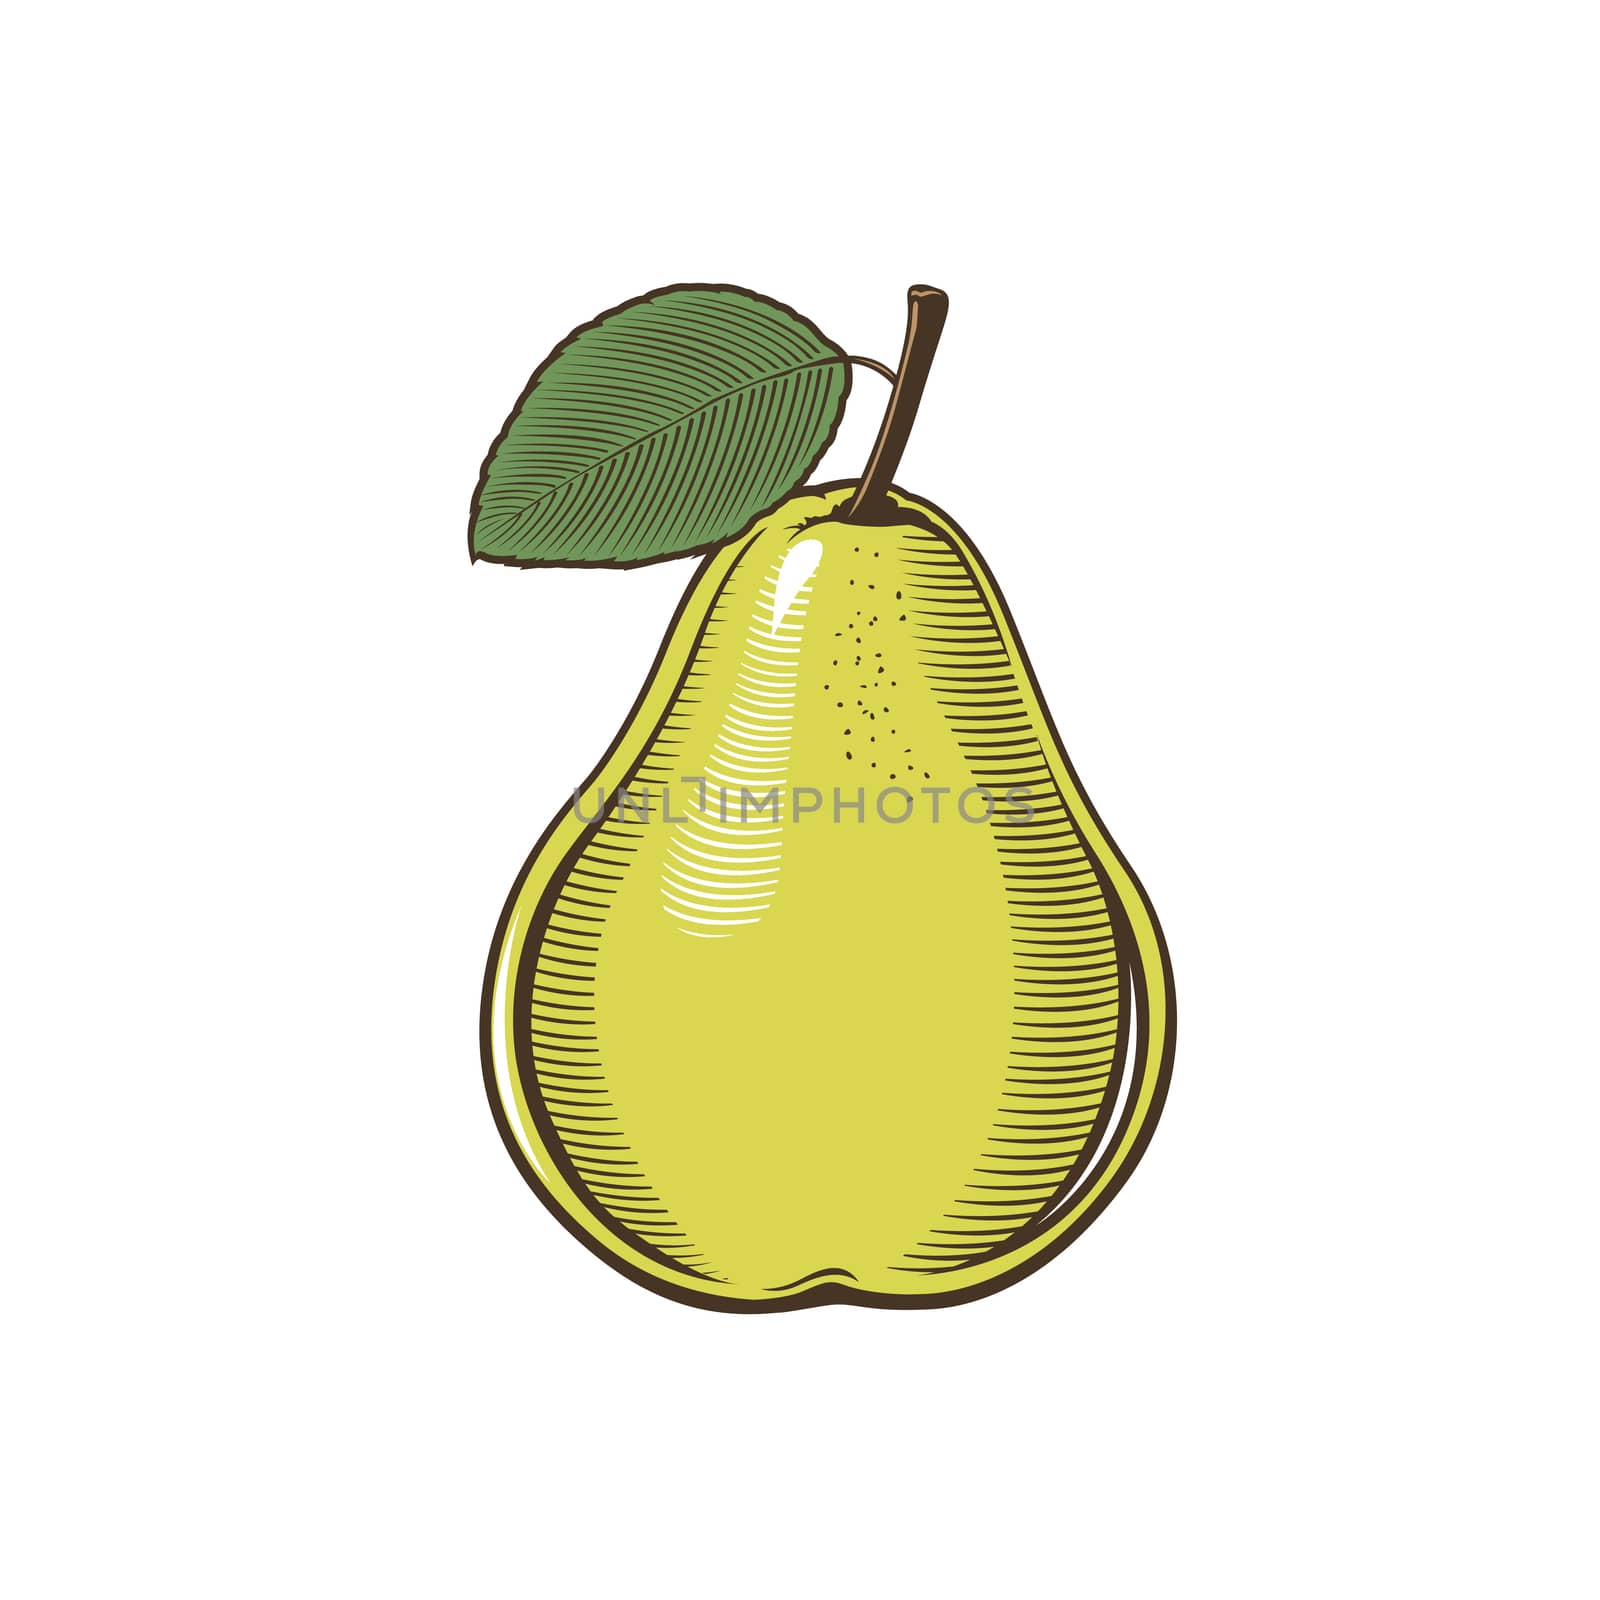 Pear in vintage style. Line art illustration.